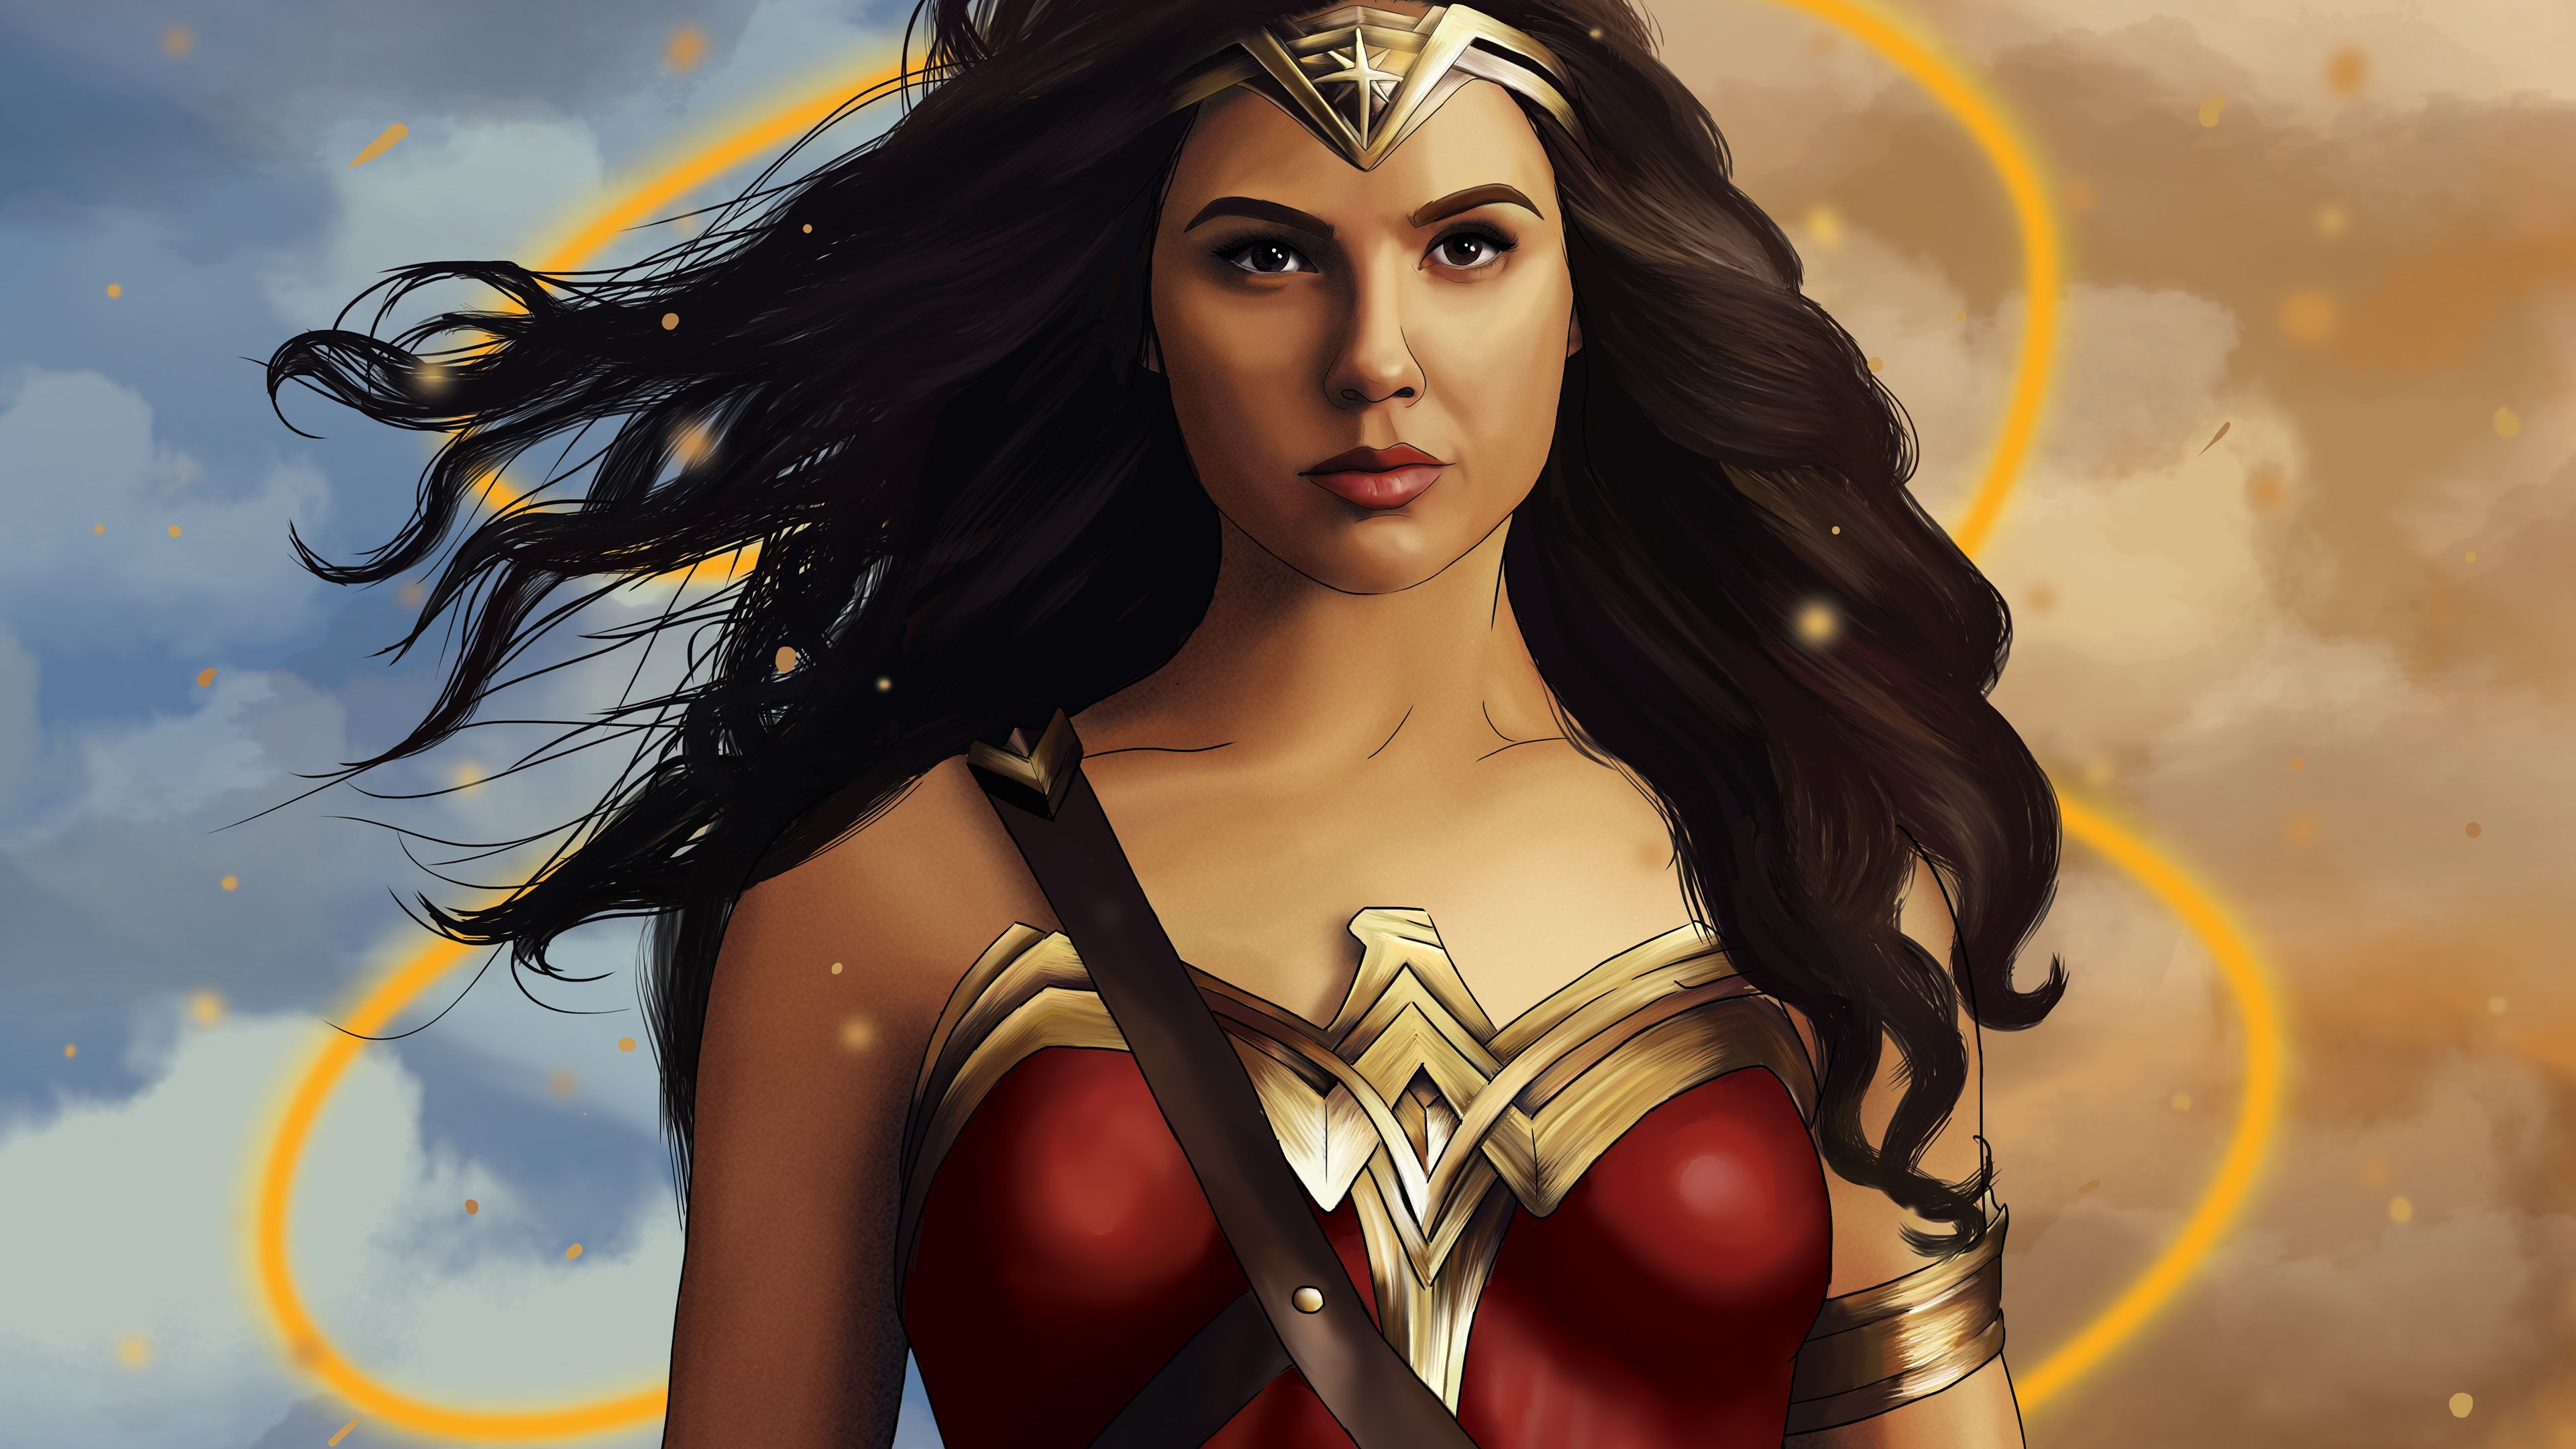 Wonder Woman 4k Artworks Wonder Woman Wallpaper, Superheroes Wallpaper, Hd Wallpaper, Digital Art Wallpaper, Behance W. Wonder Woman, Gal Gadot, Art Wallpaper